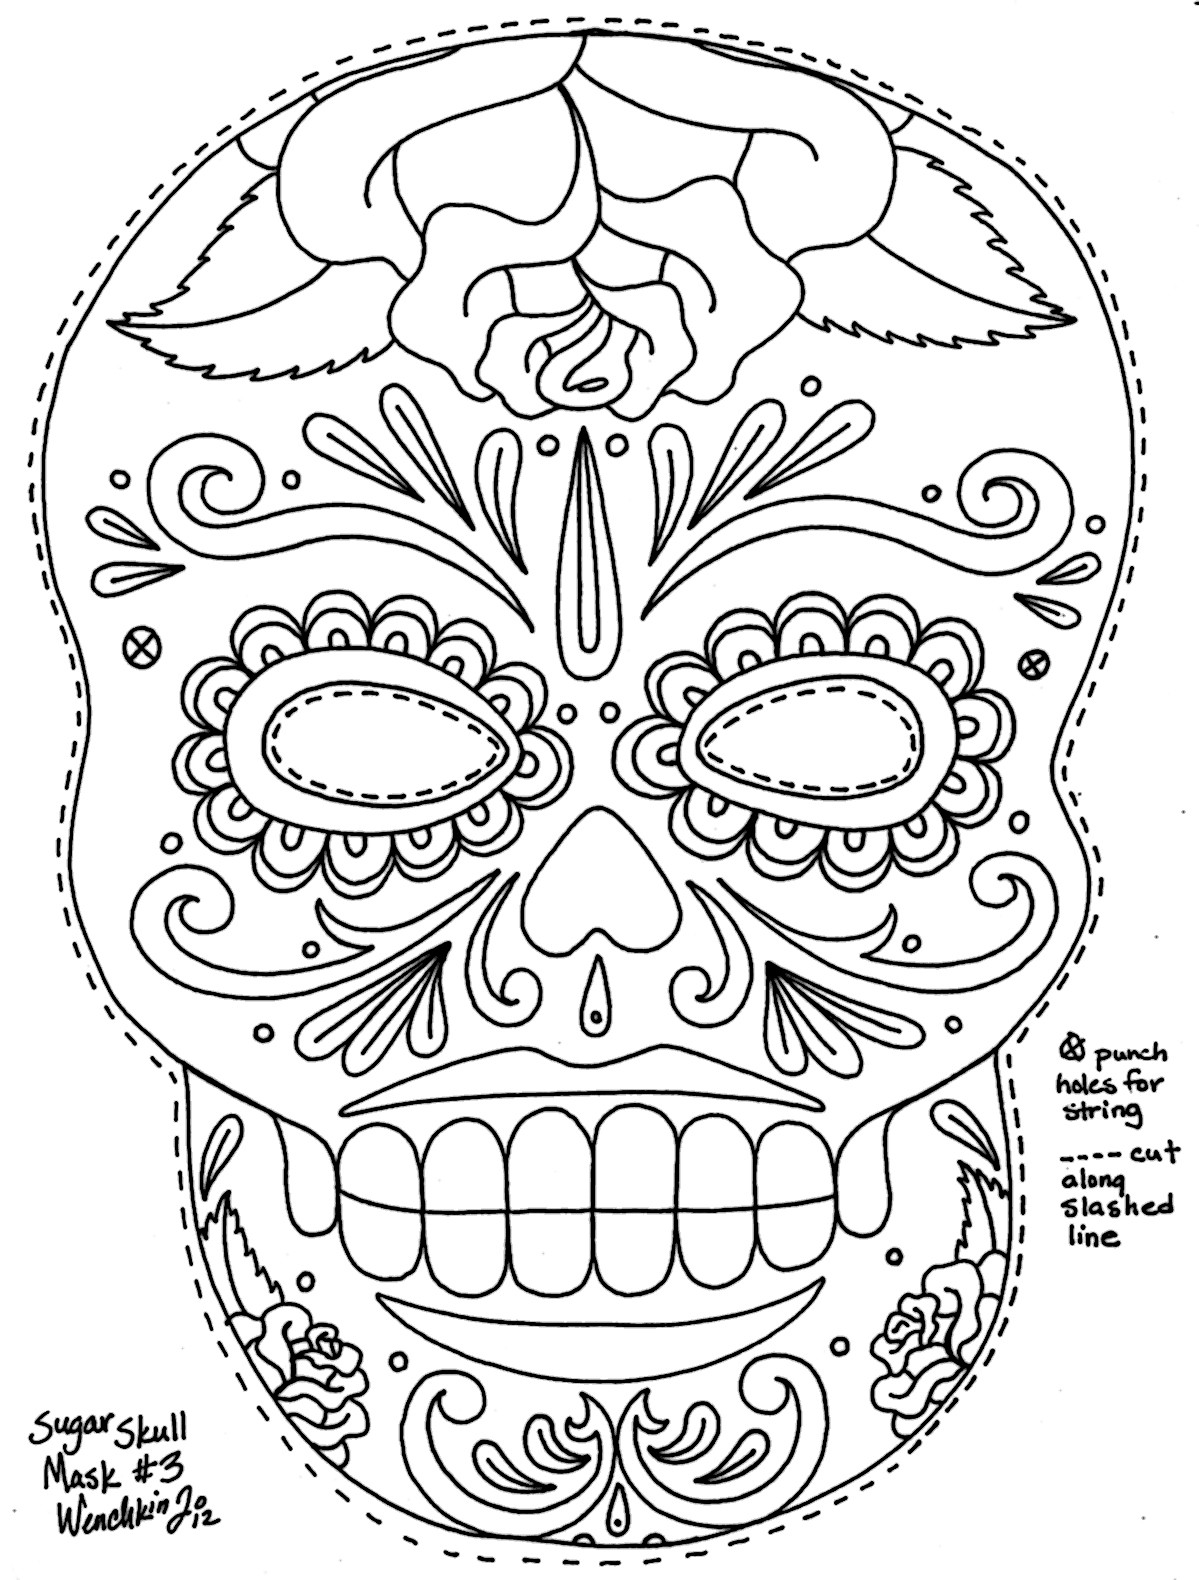 Printable Sugar Skull Coloring Pages
 Yucca Flats N M October 2012